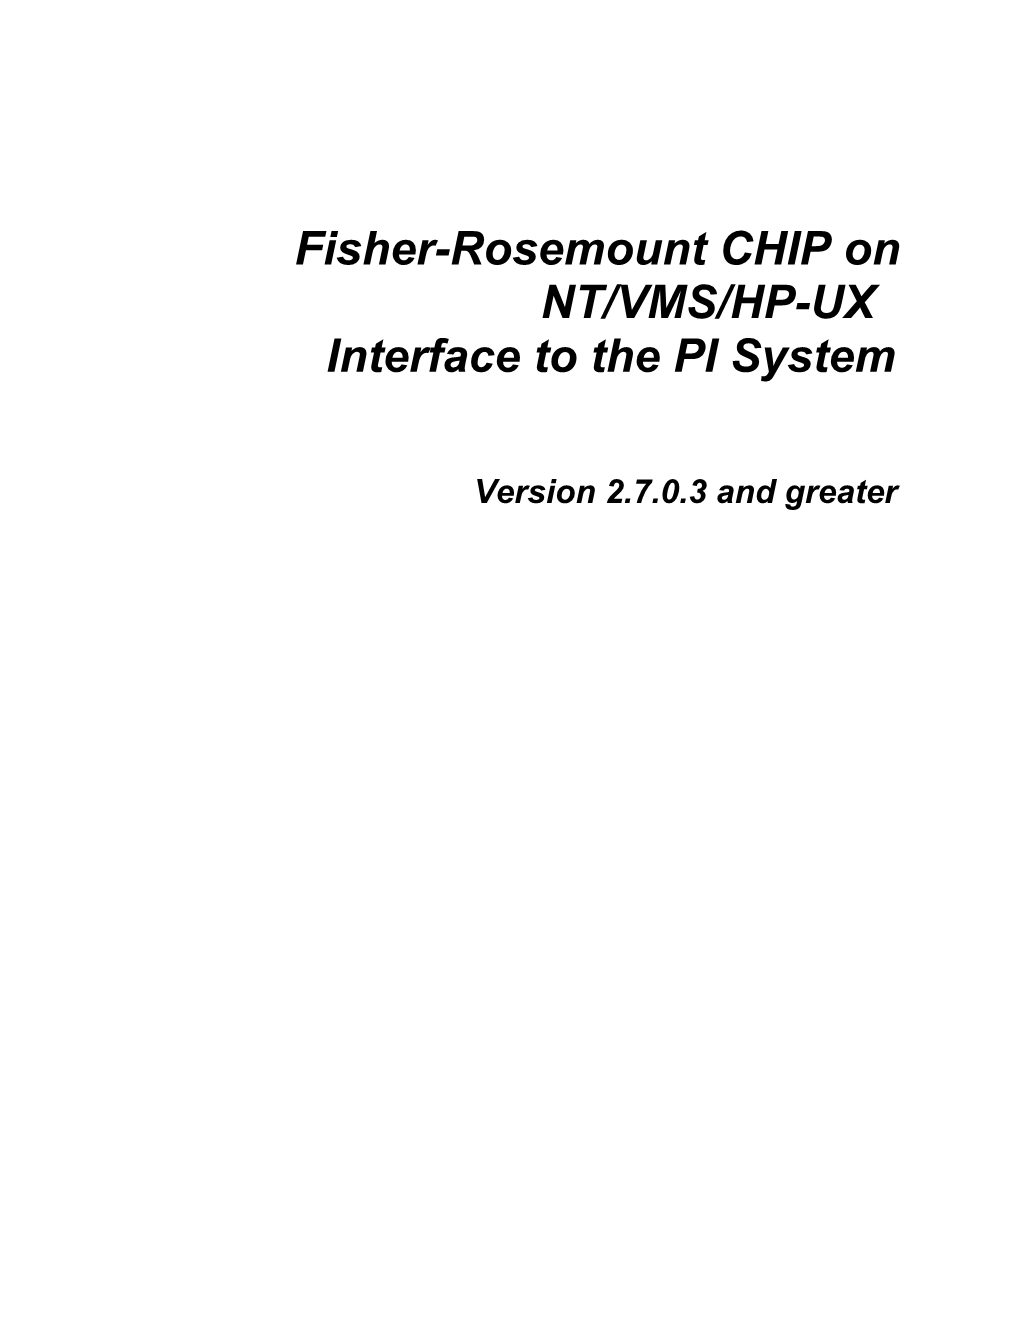 Fisher-Rosemount CHIP on NT/VMS/HP-UX